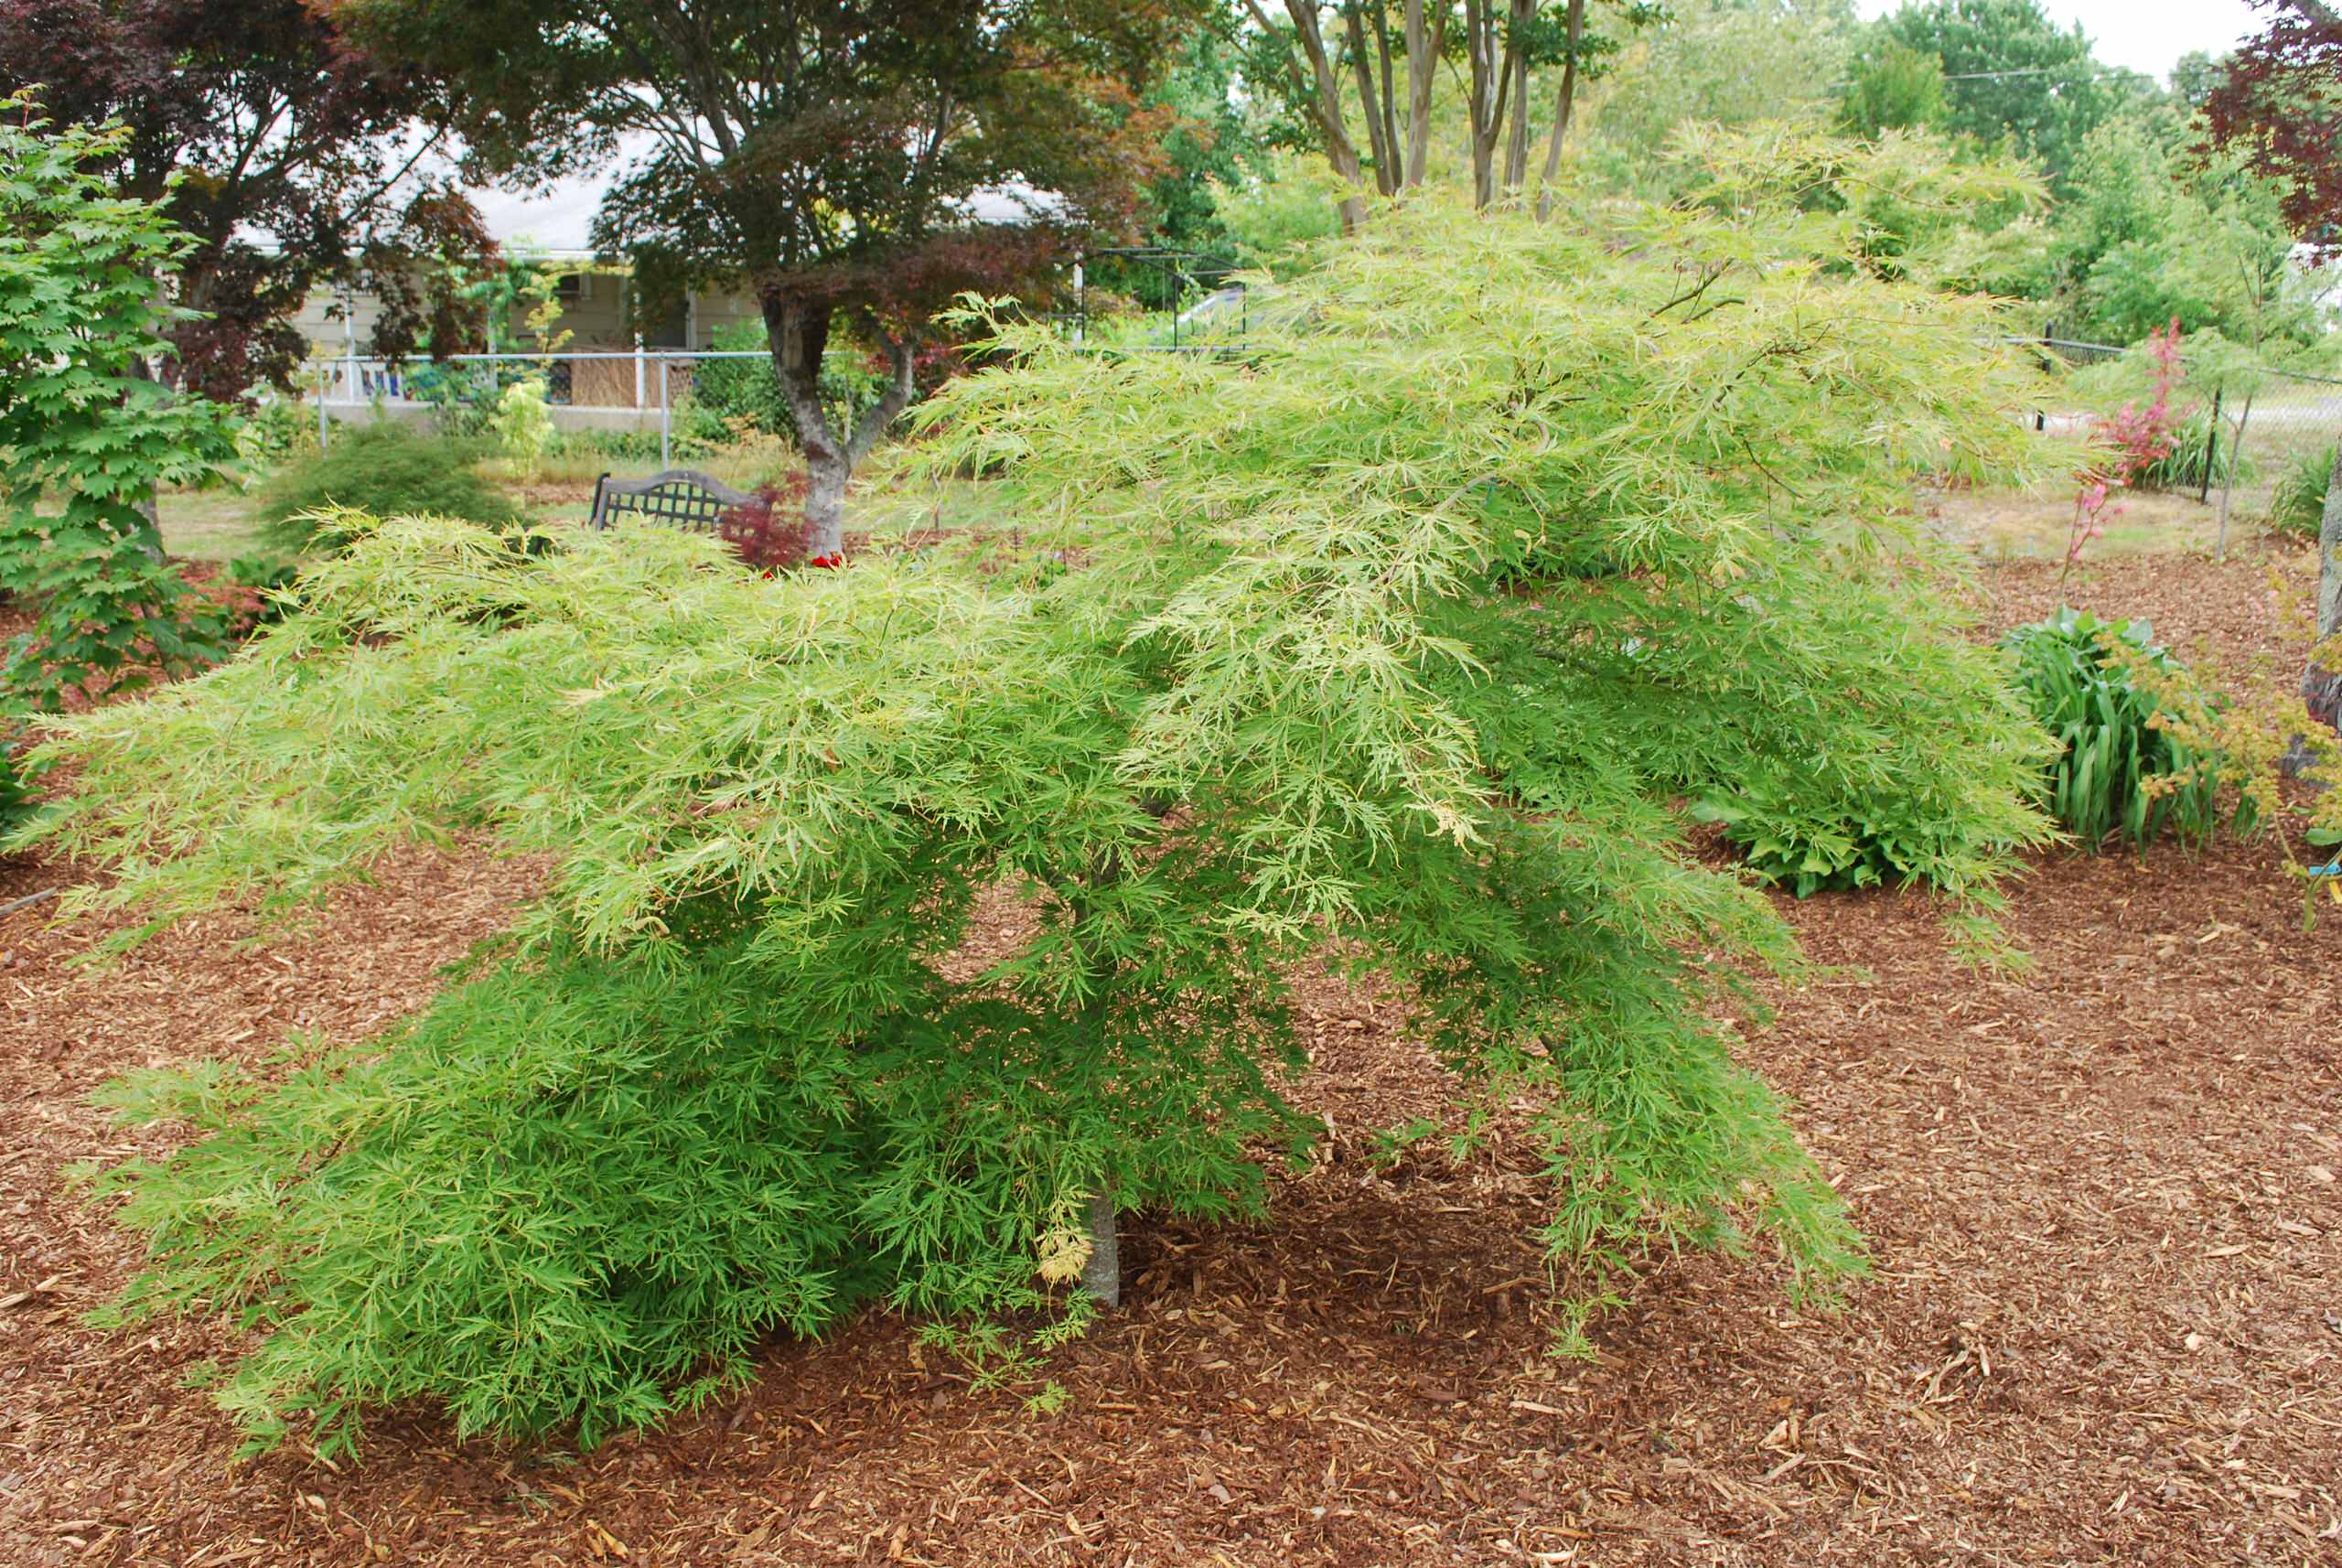 Acer palmatum 'Germaine's Gyration' a.k.a. 'contorta'